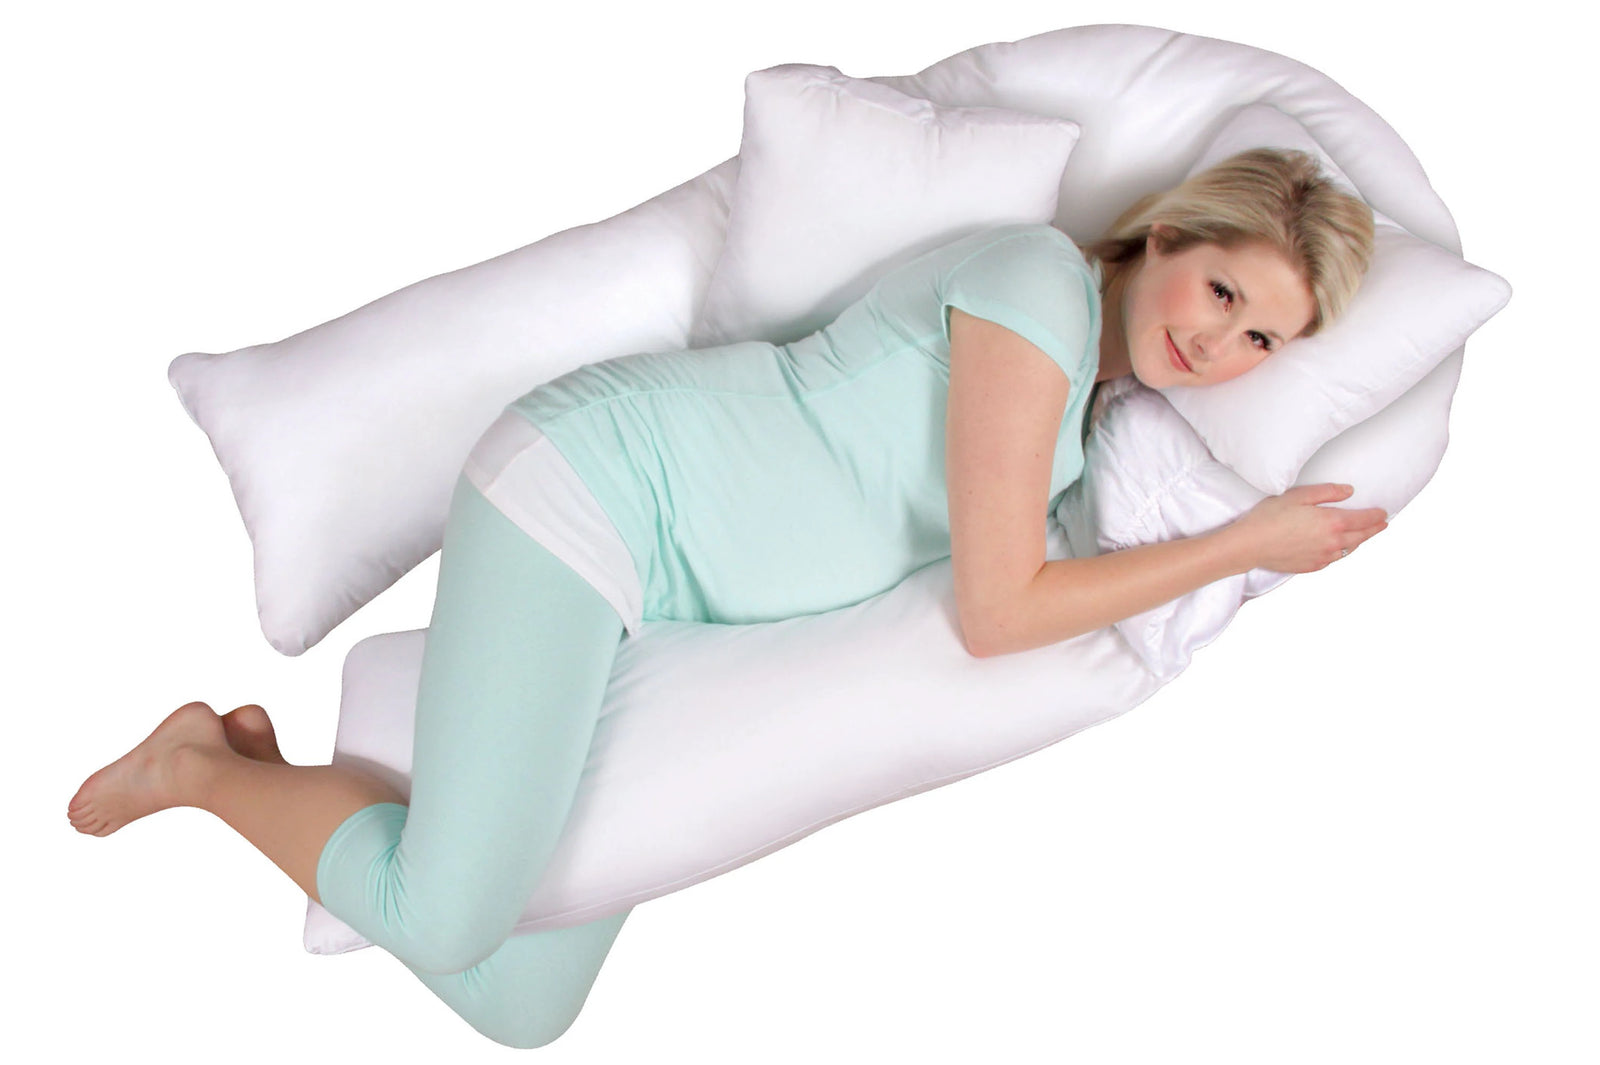 Contour Swan Body Pillow